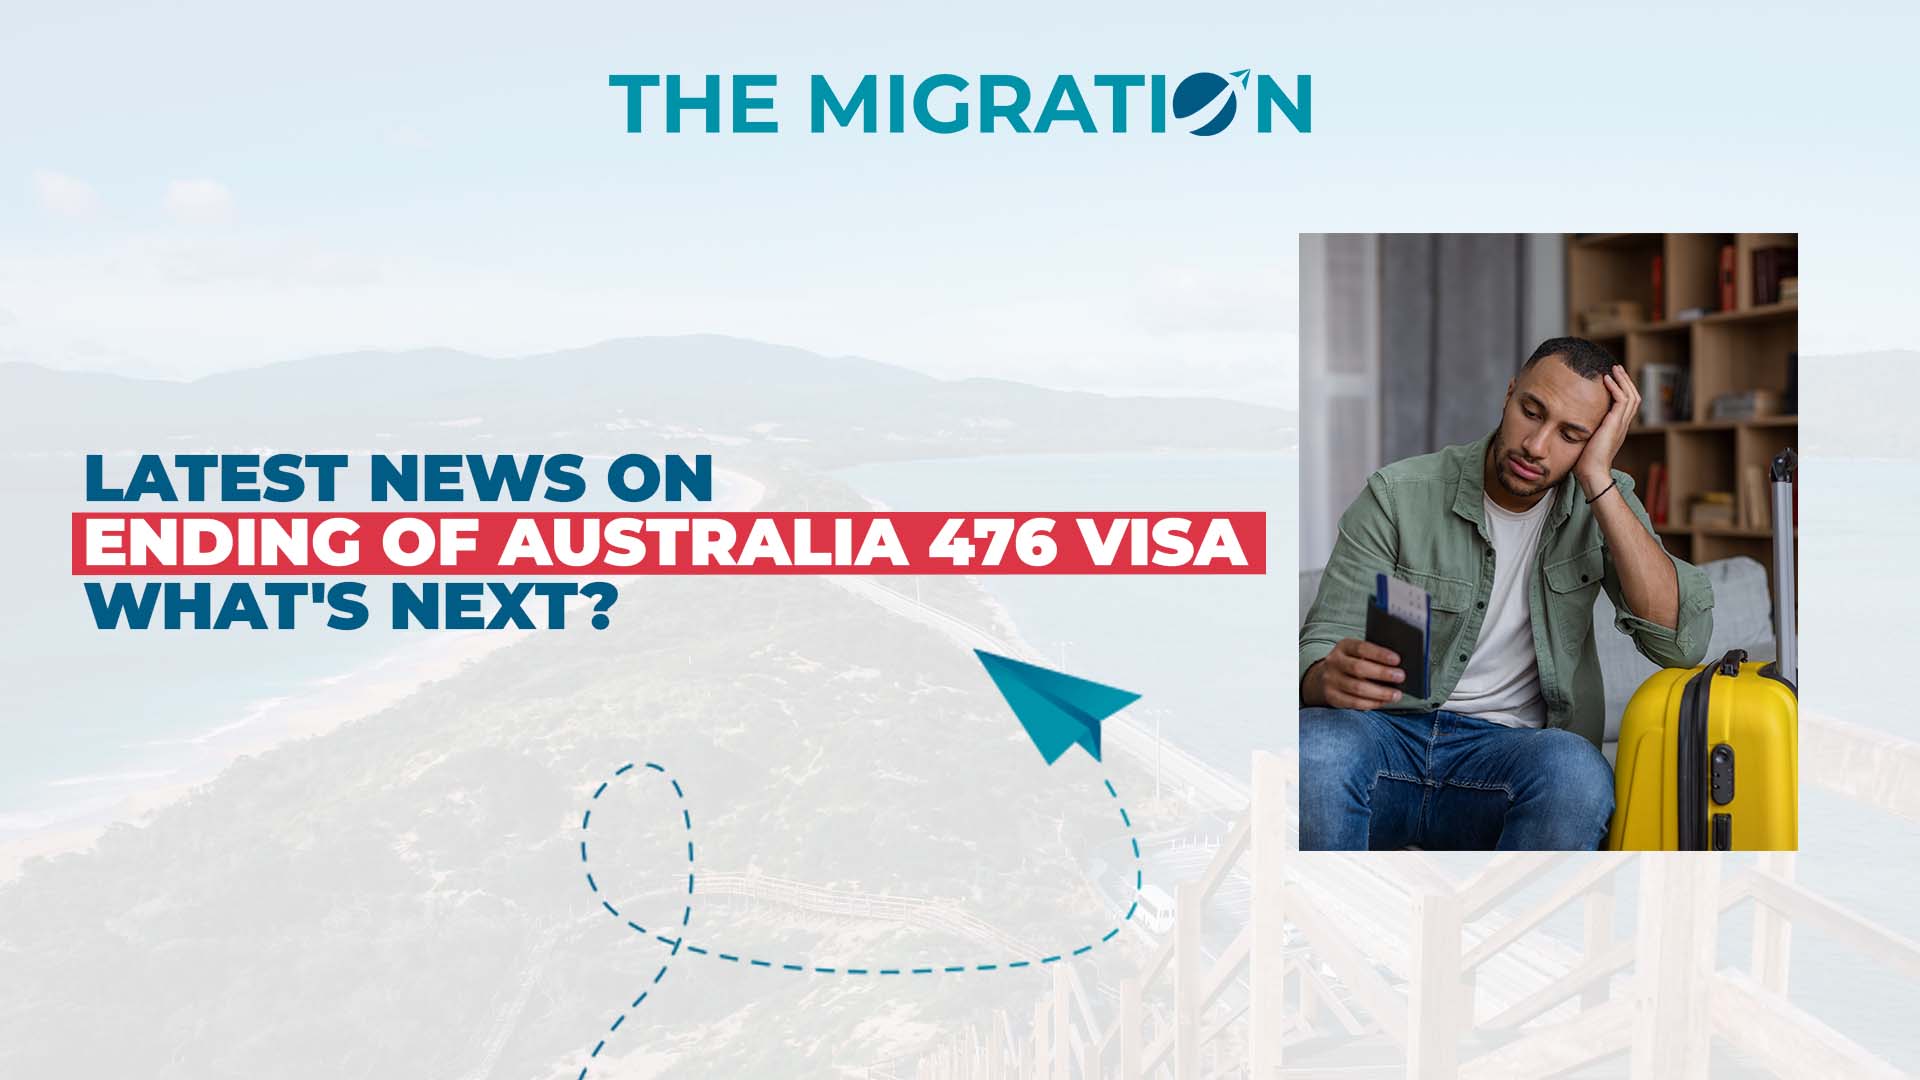 Australia 476 visa latest news